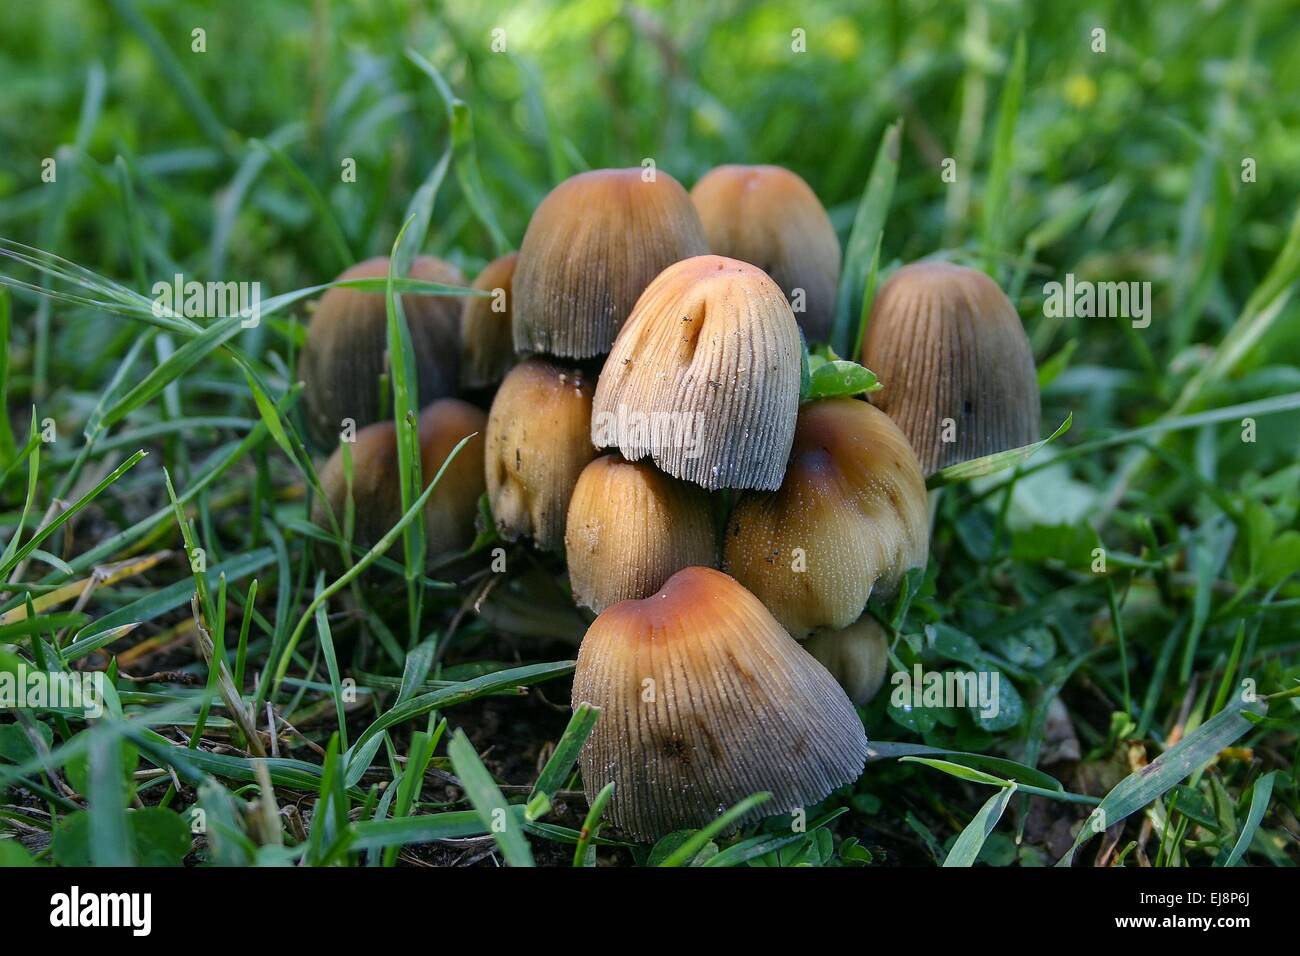 Mushrooms in the grass macro Stock Photo